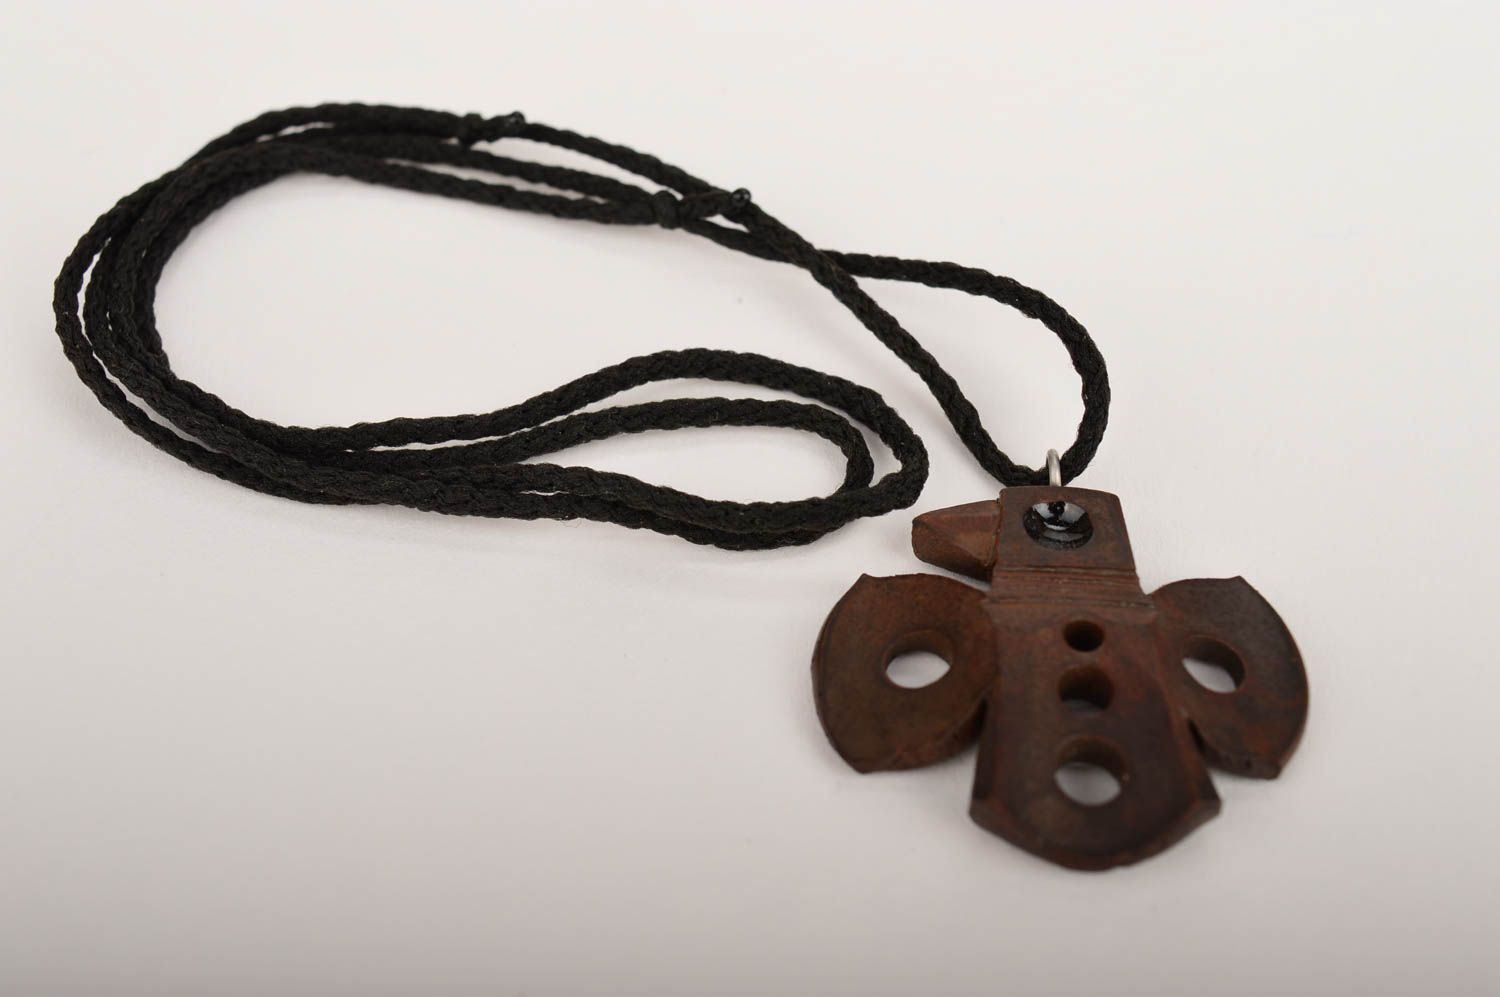 Handmade pendant designer pendant clay jewelry unusual accessory gift ideas photo 3